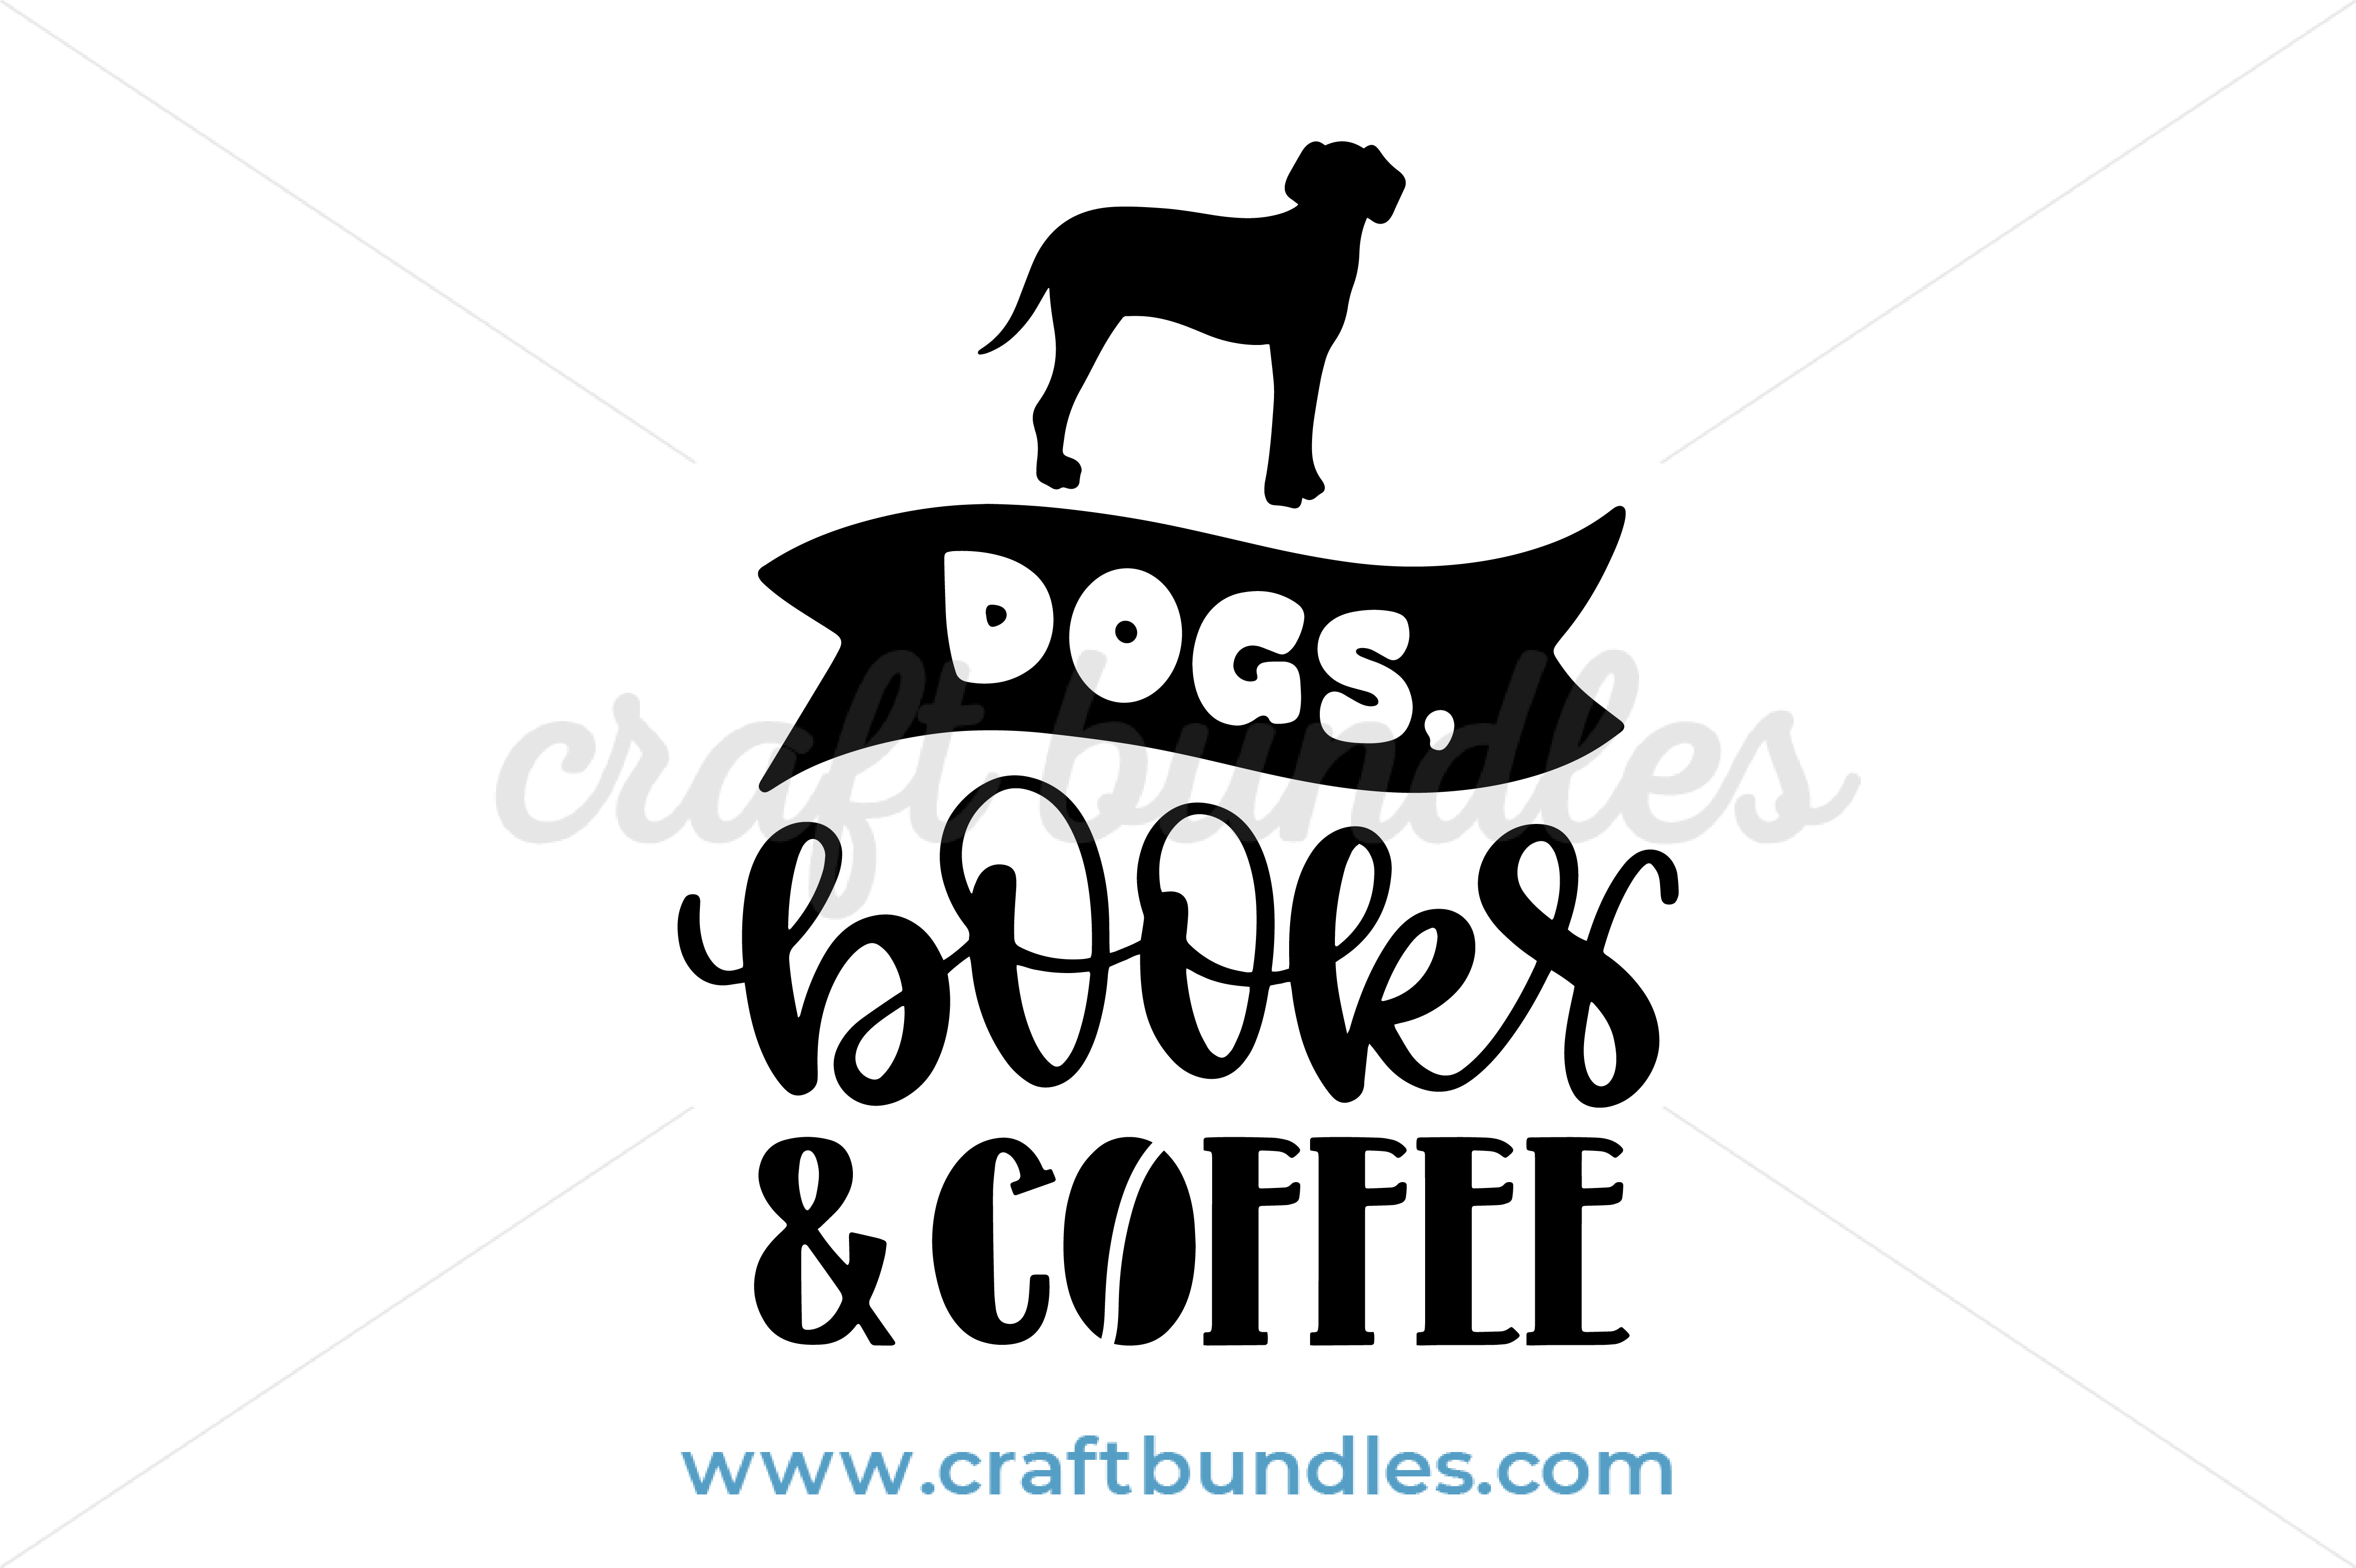 Dogs Books And Coffee Svg Cut File Craftbundles